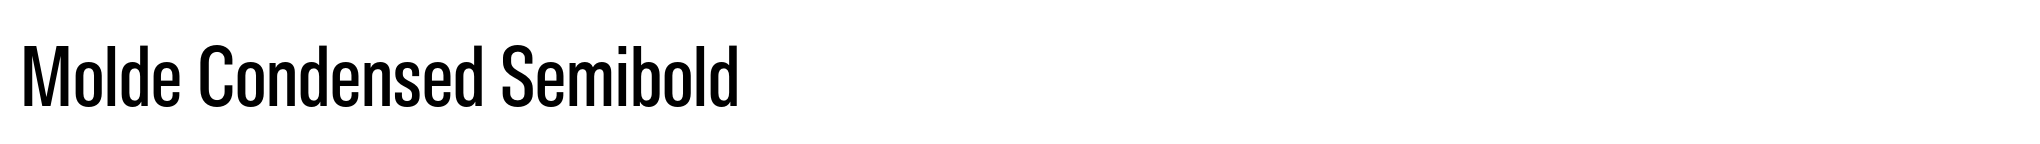 Molde Condensed Semibold image